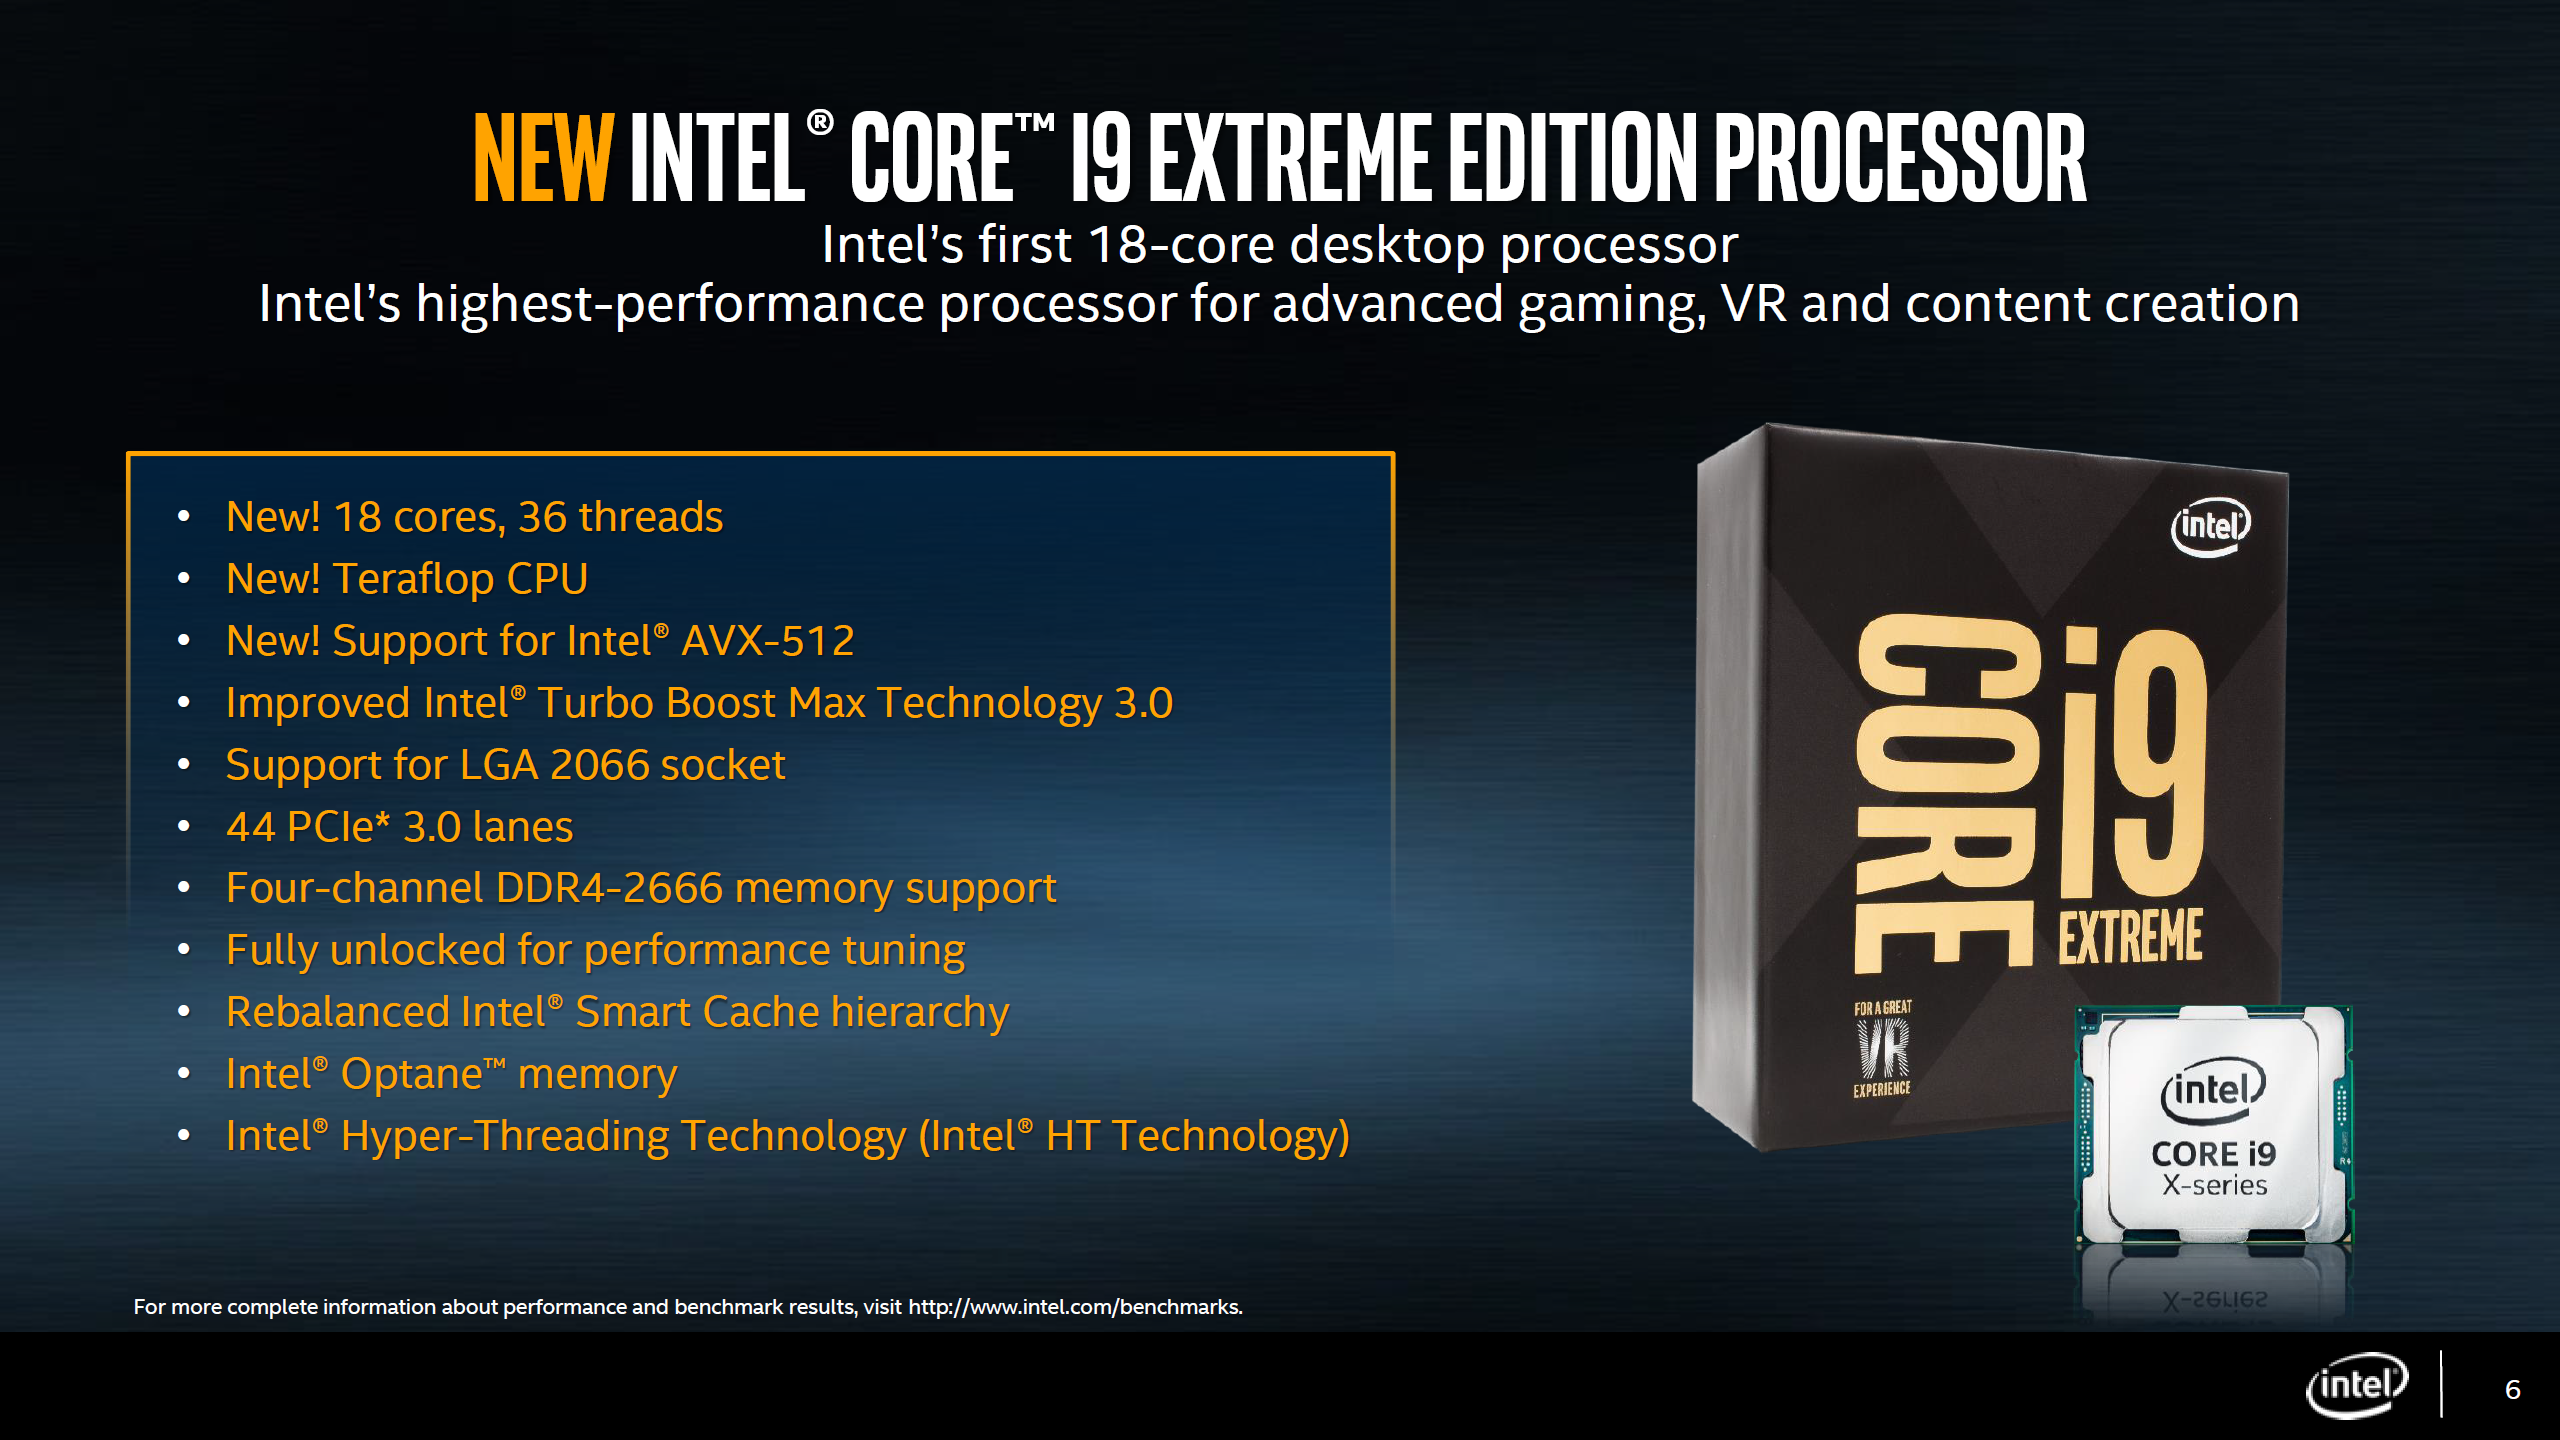 intel core x x299 5 ผลทดสอบ Intel Core i9 7980XE Extreme Edition Processor อย่างไม่เป็นทางการในการเรนเดอร์ Cinebench 15 ที่แรงสะใจคอ Extreme สุดๆ